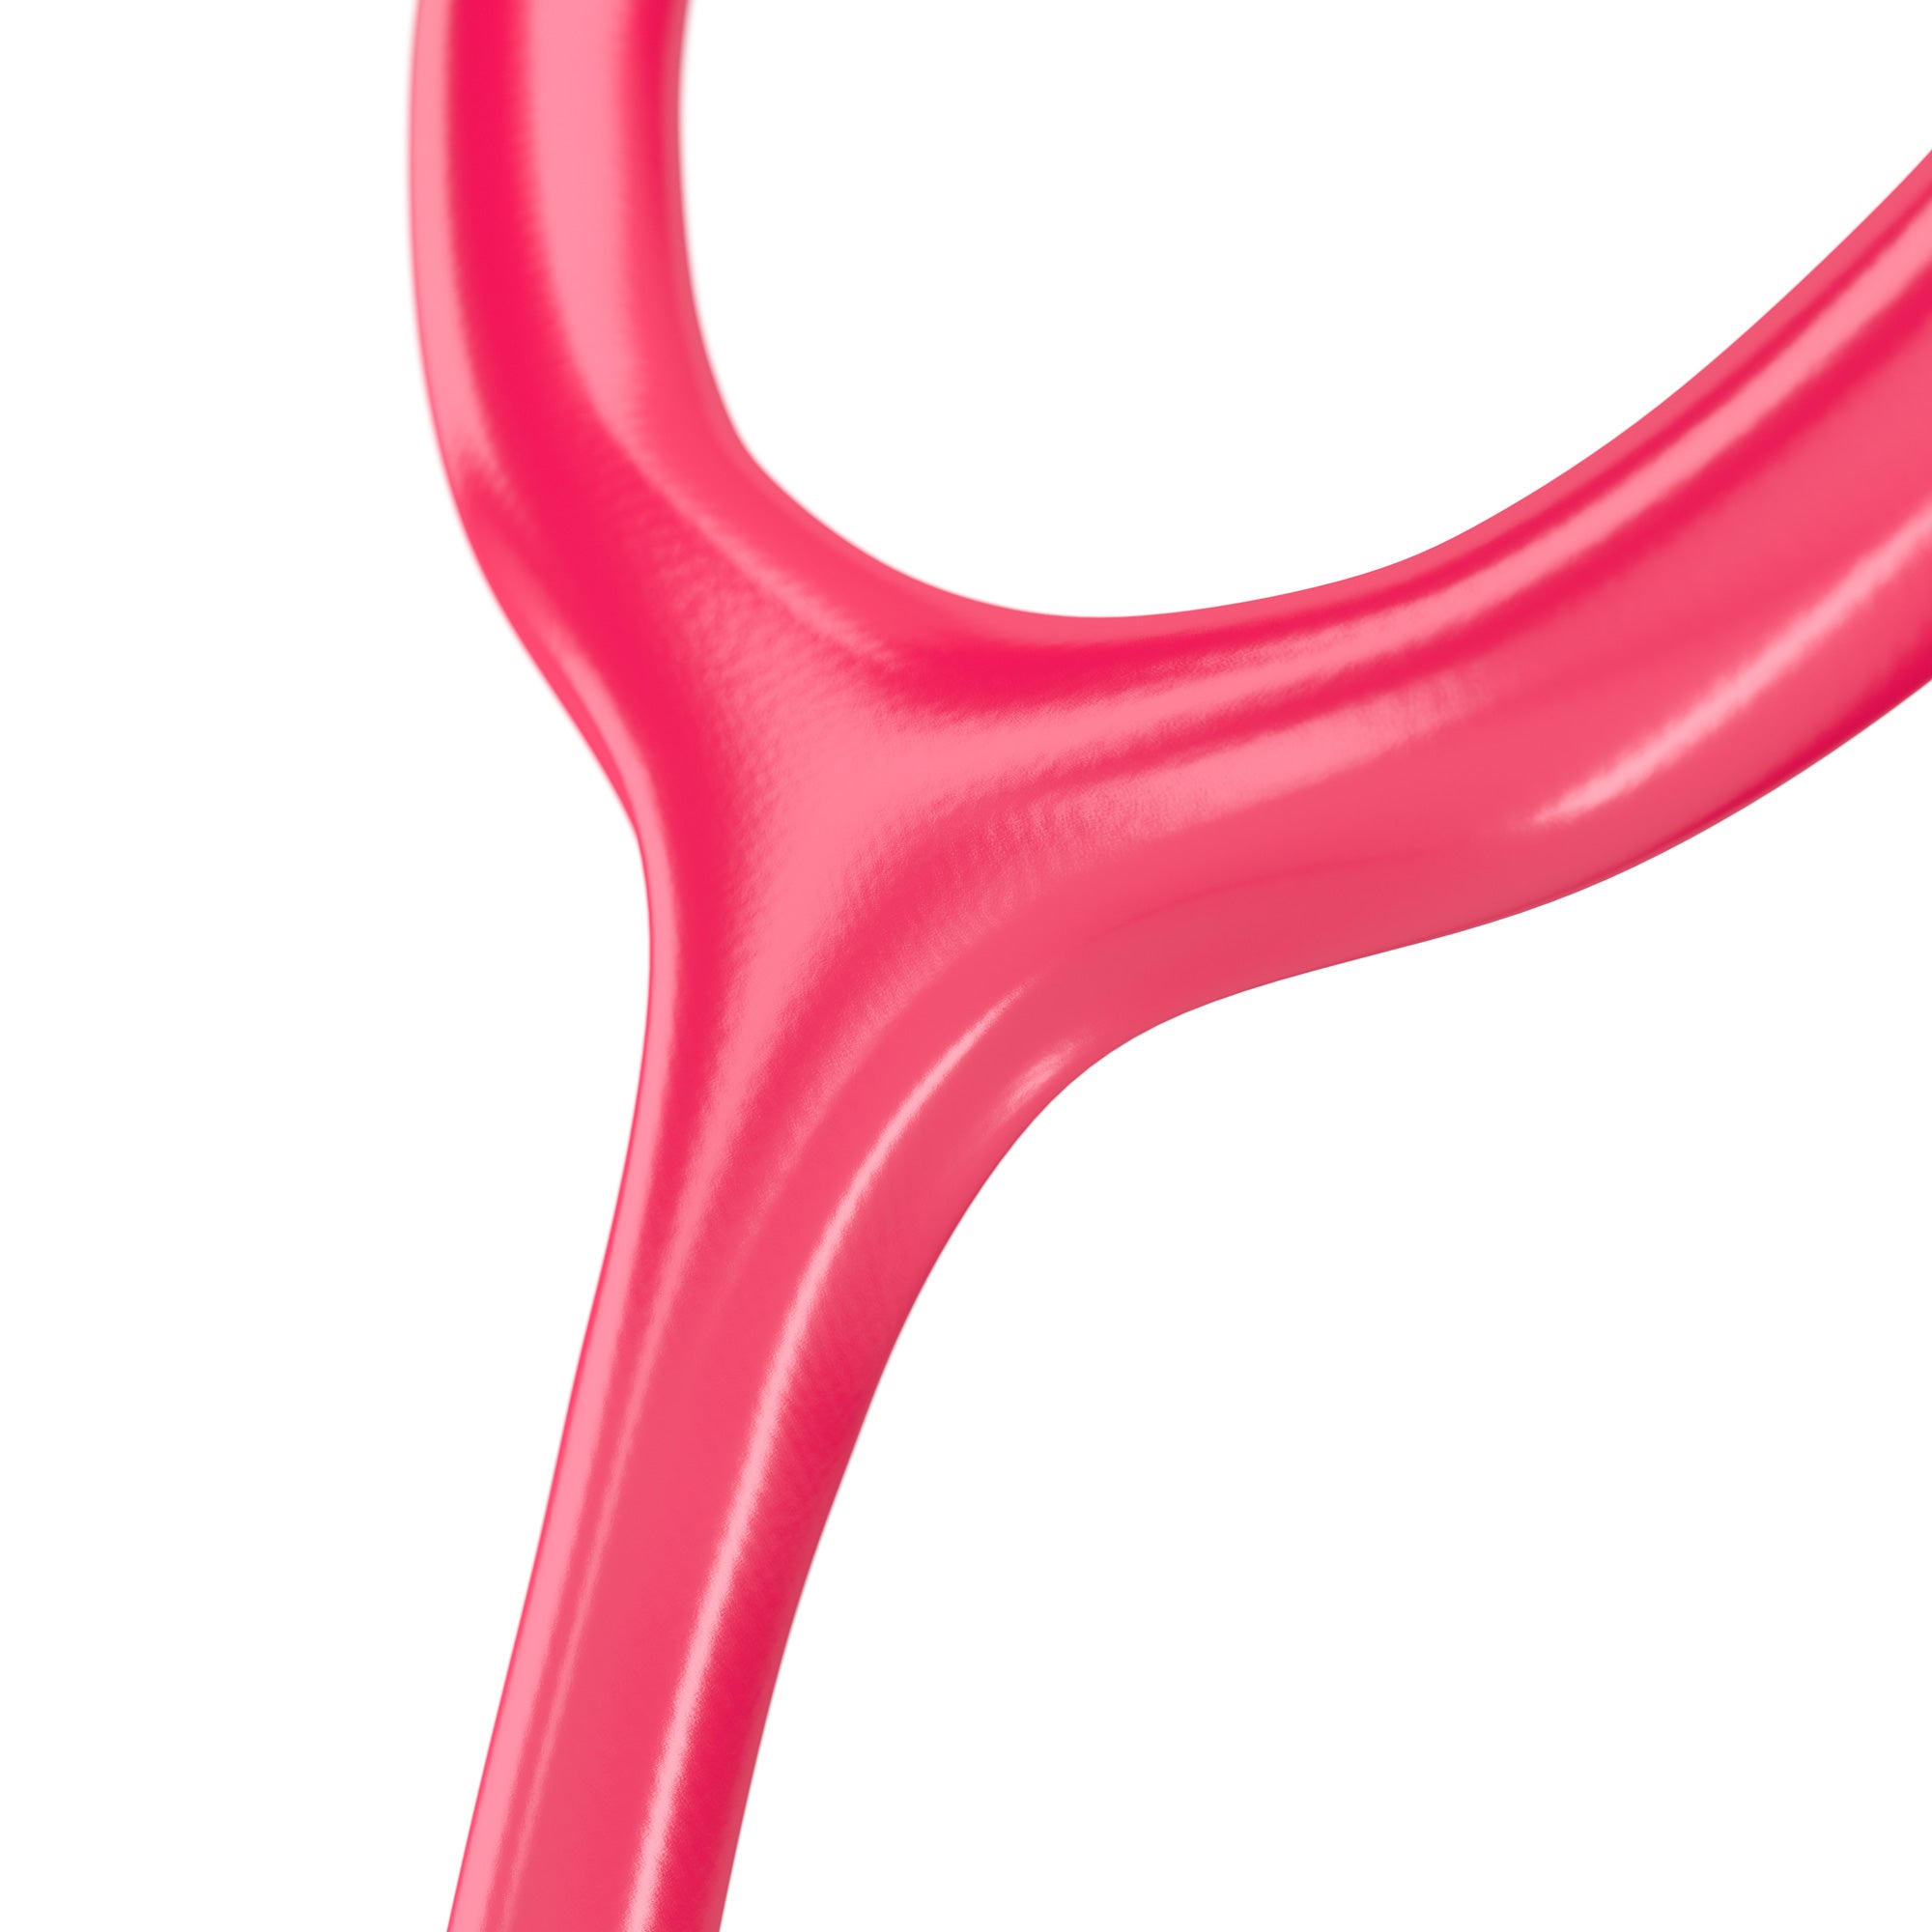 Acoustica® Stethoscope - Raspberry Pink